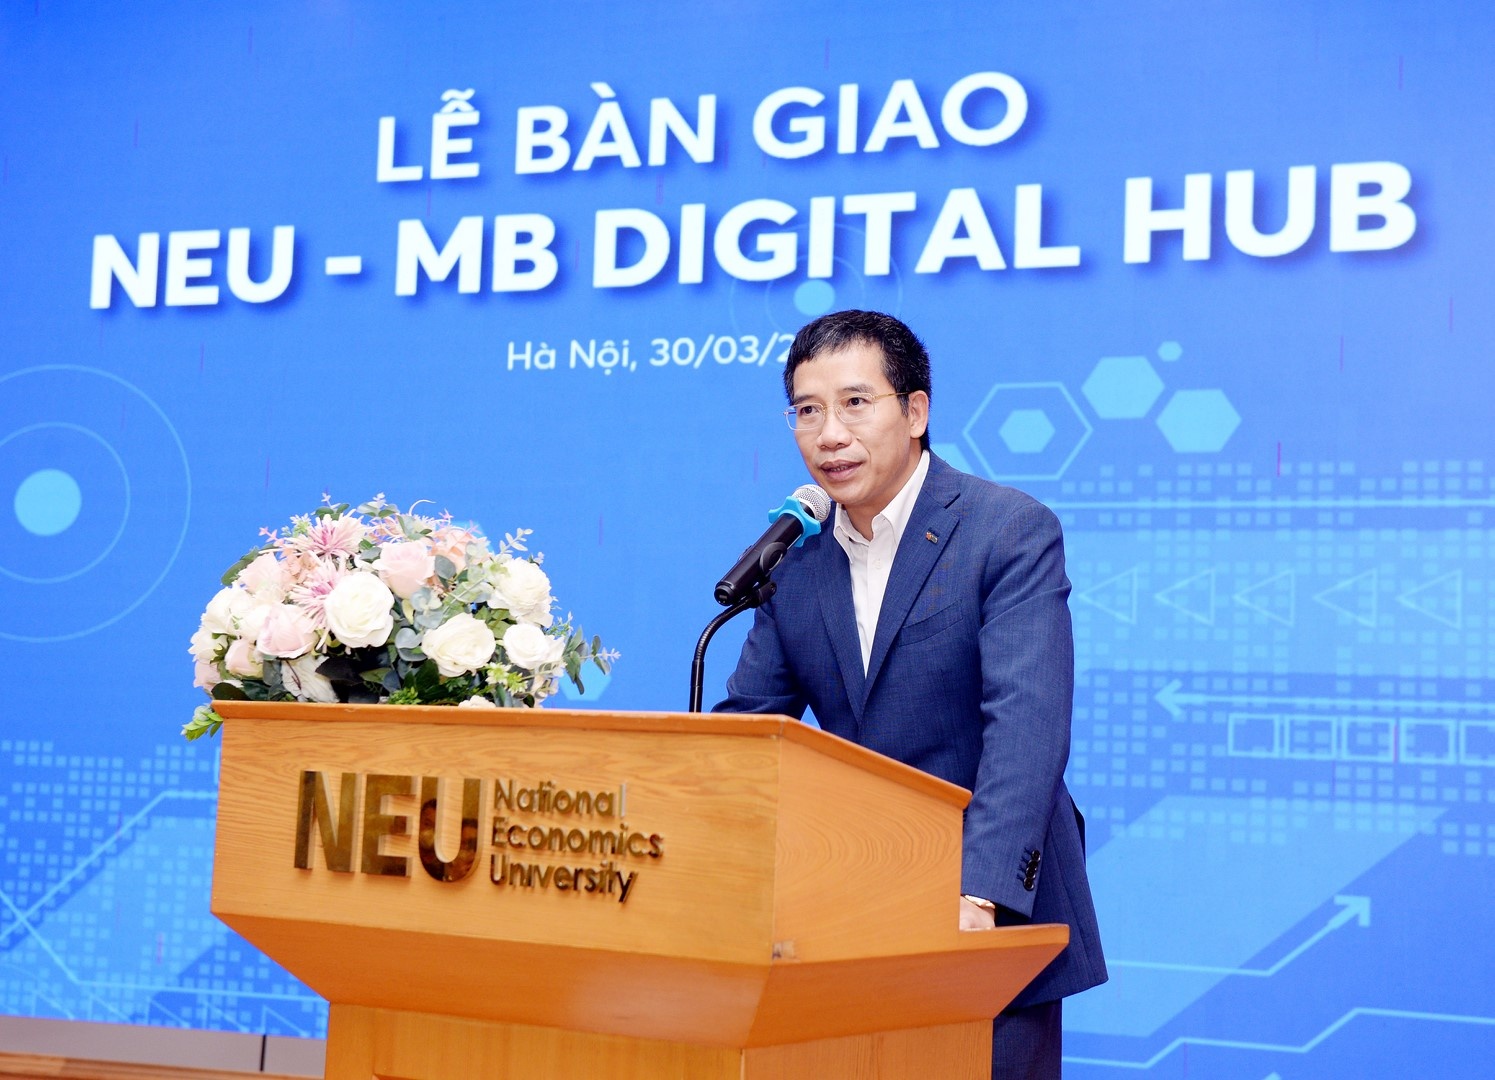 NEU-MB Digital Hub aspires to facilitate digital banking experiences for students